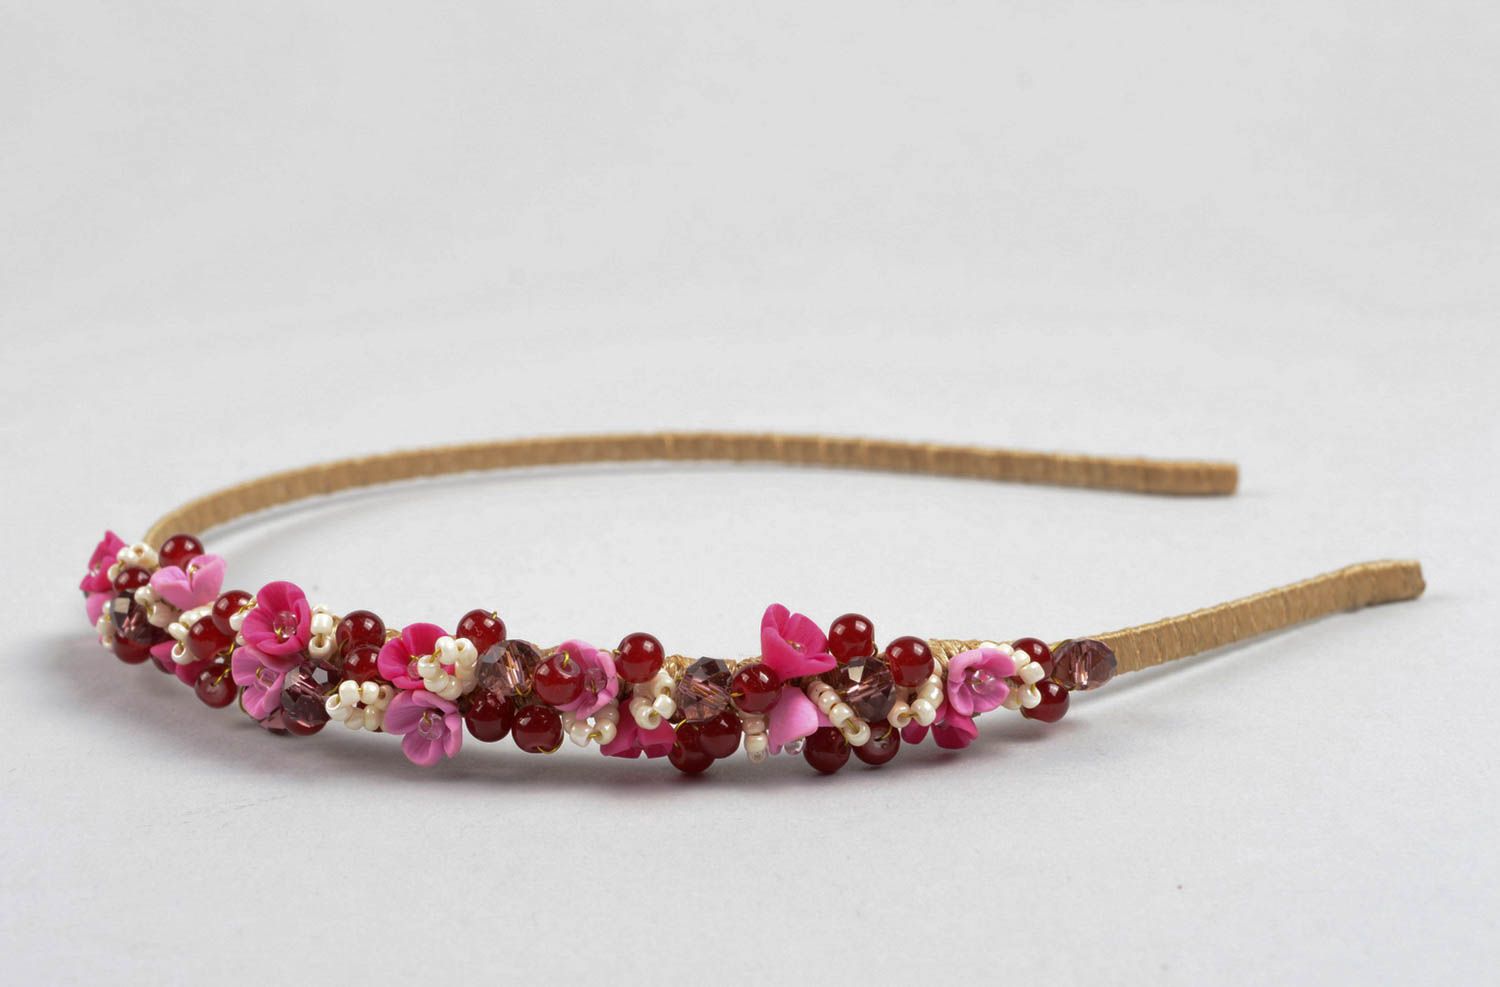 Flower Accessories Handmade For Women Colored Beads Headbands Hair Band 